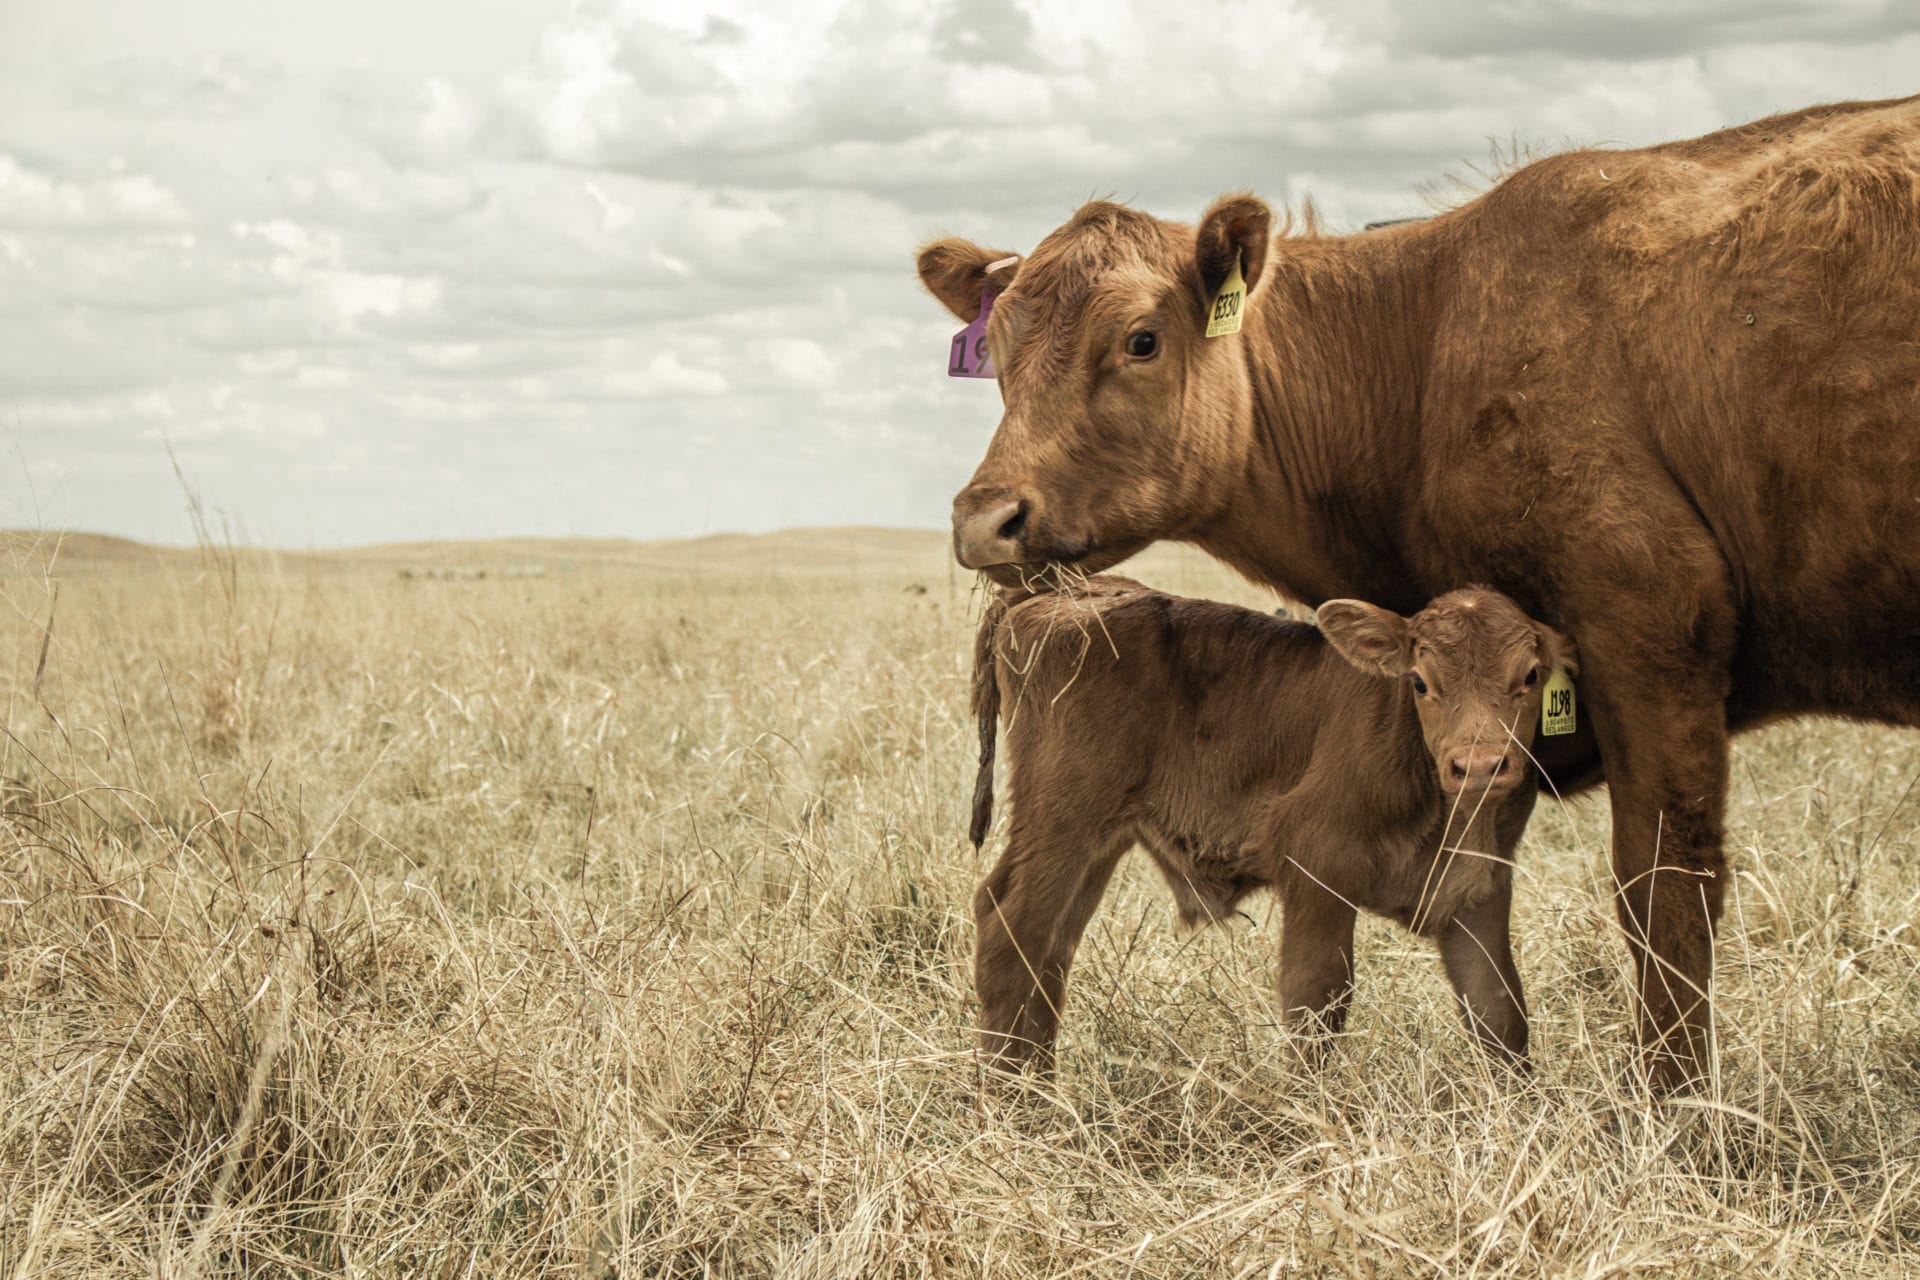 Mama and calf